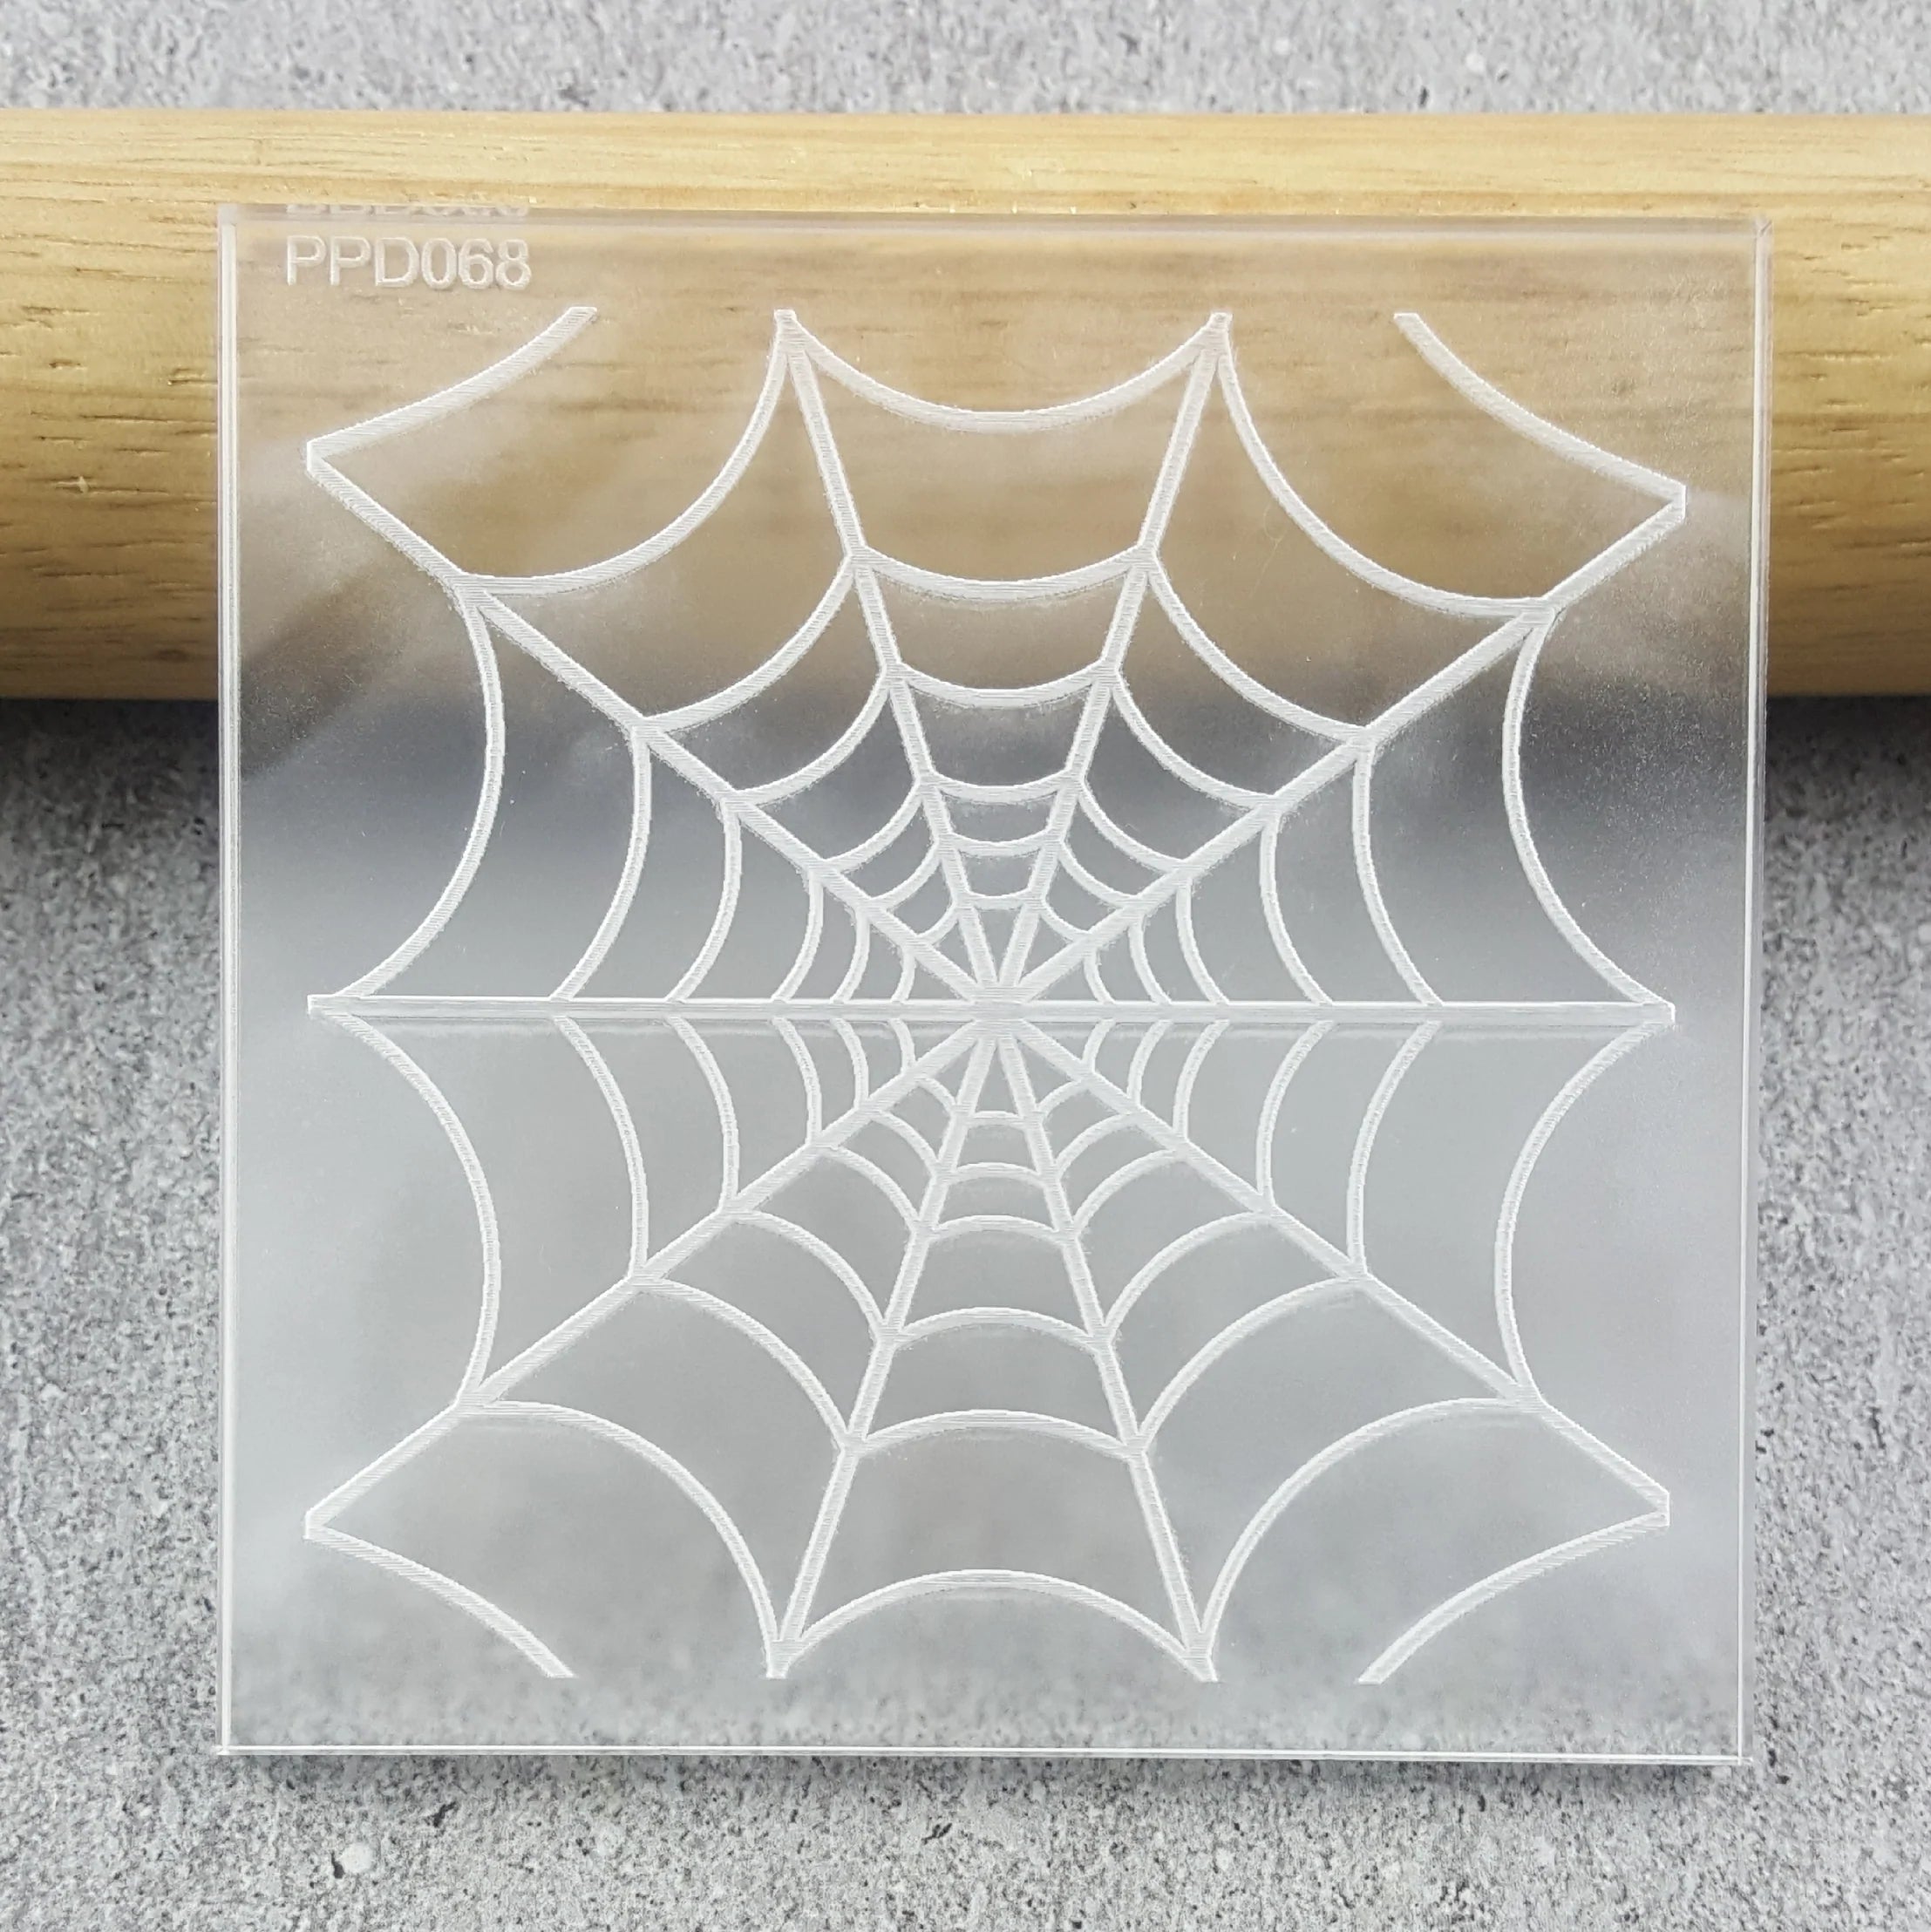 Custom Cookie Cutters Spiderweb Pattern Plate